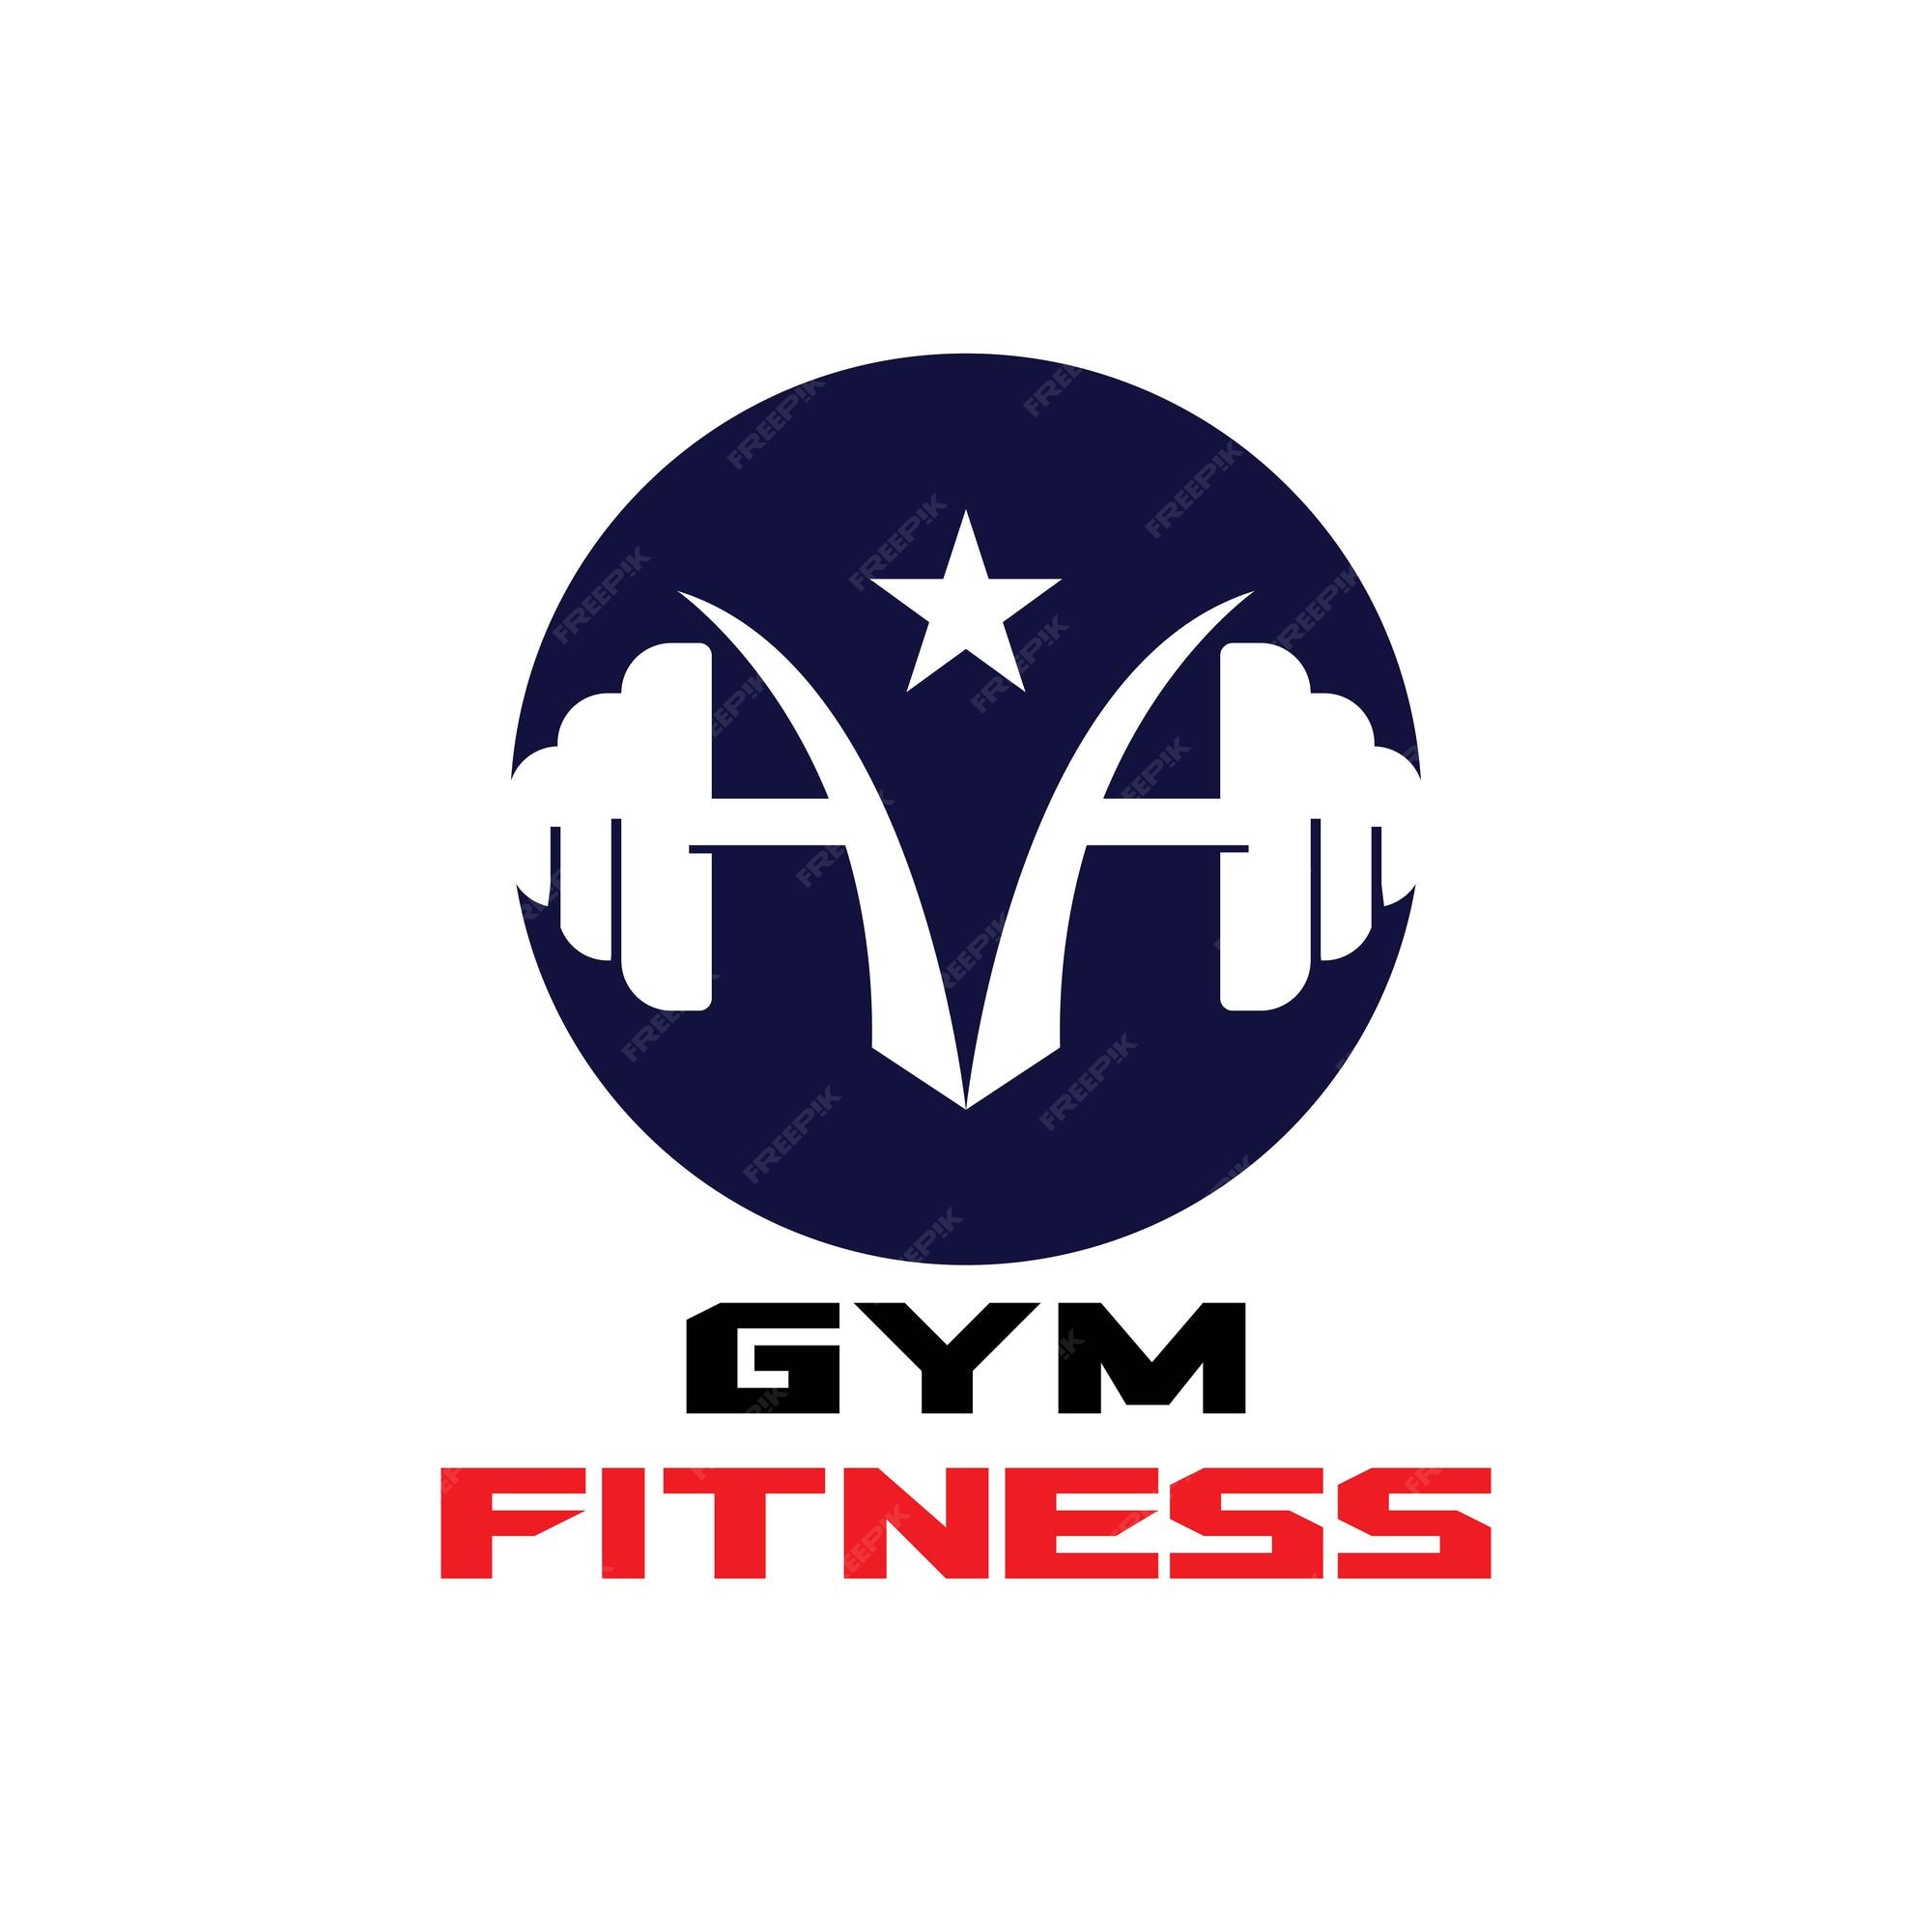 Premium Vector | Gym fitness health people logo vector image